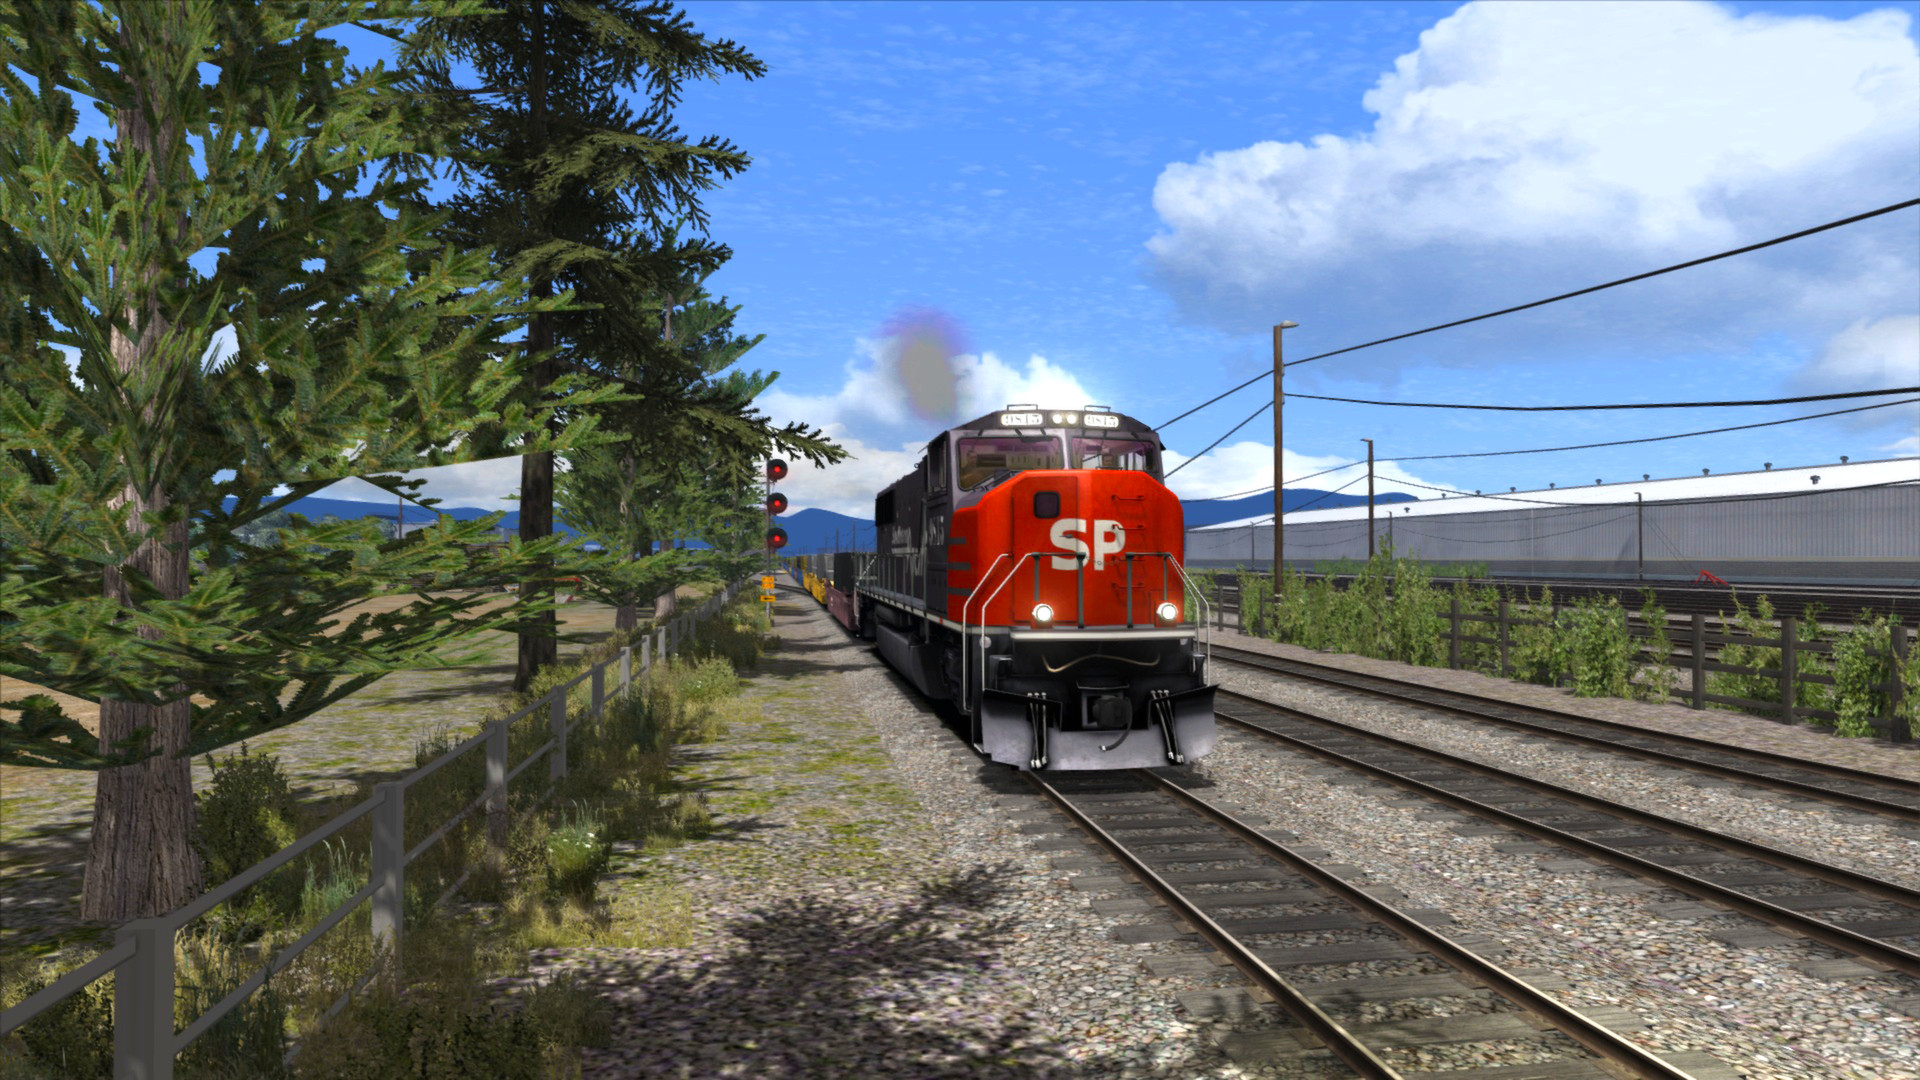 Train Simulator: Southern Pacific SD70M Loco Add-On screenshot